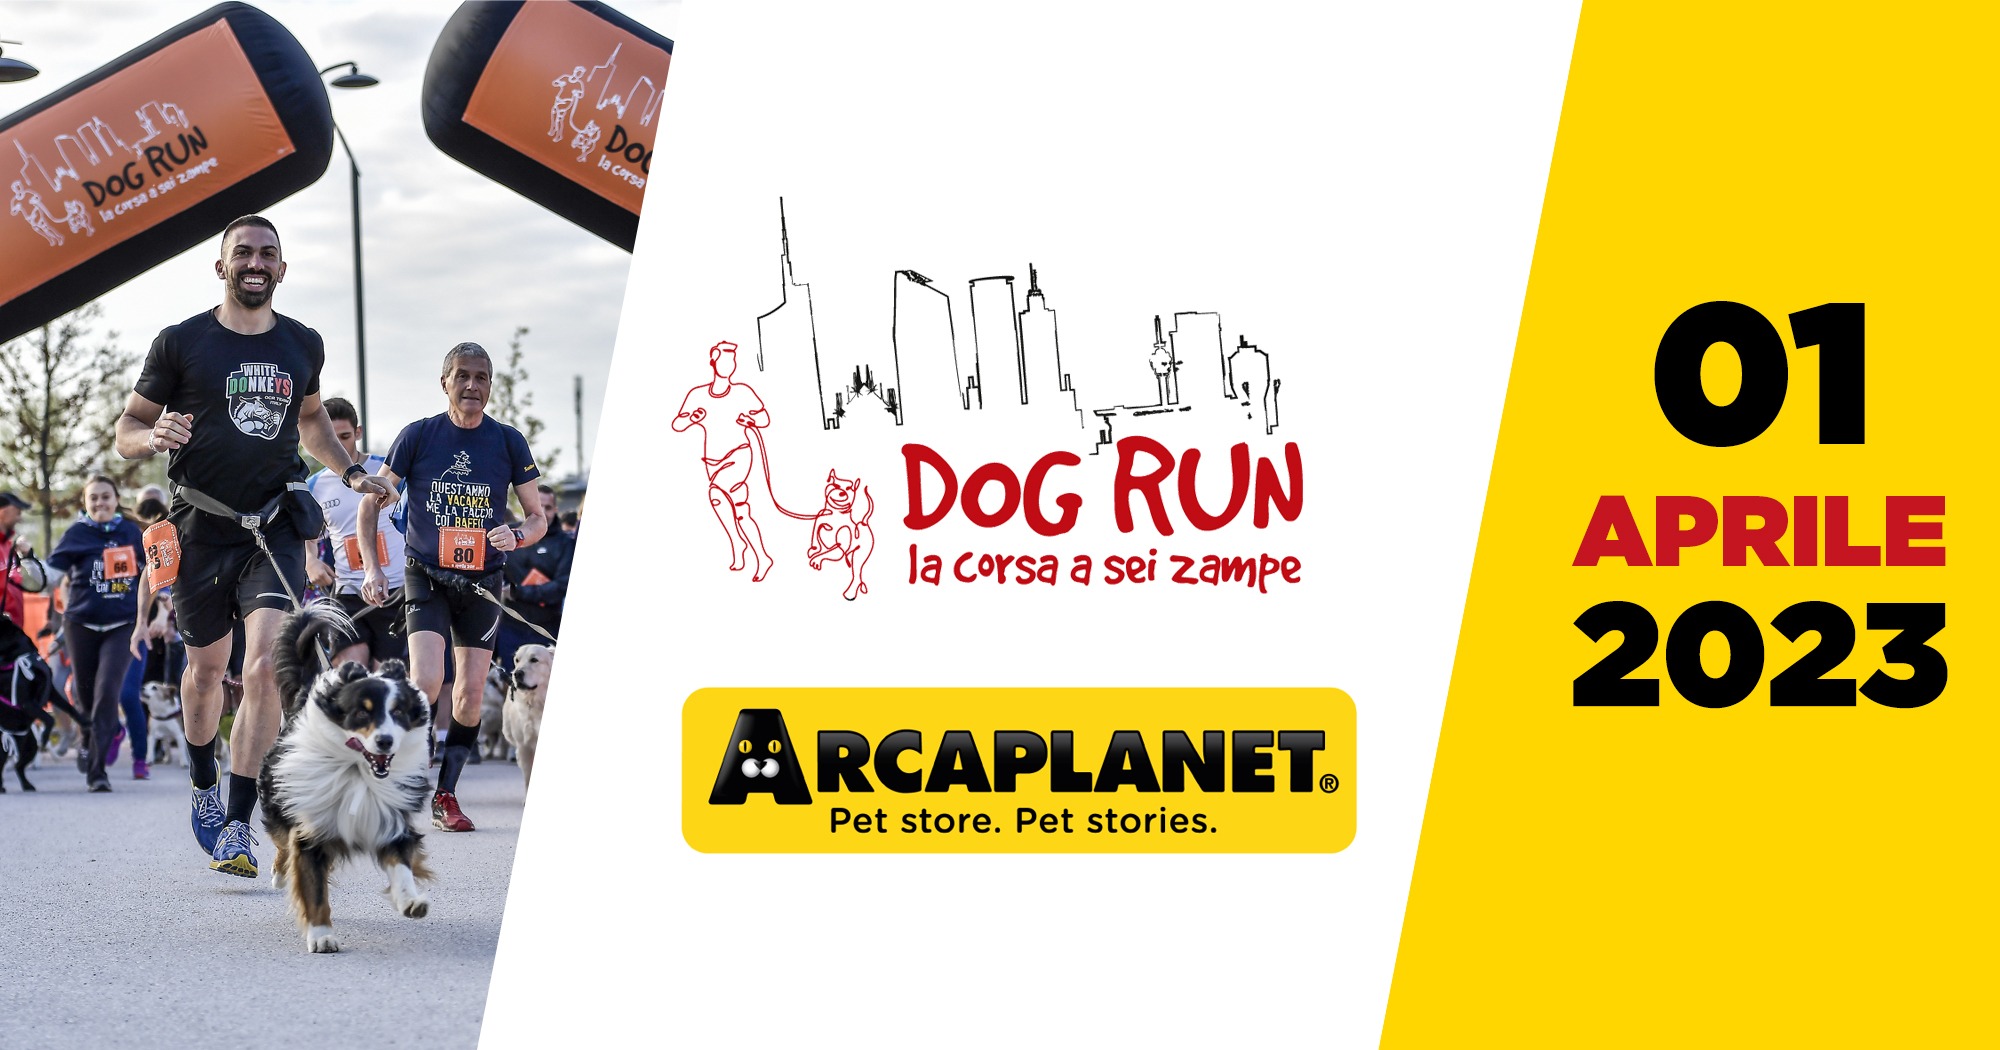 Dog Run powered by Arcaplanet